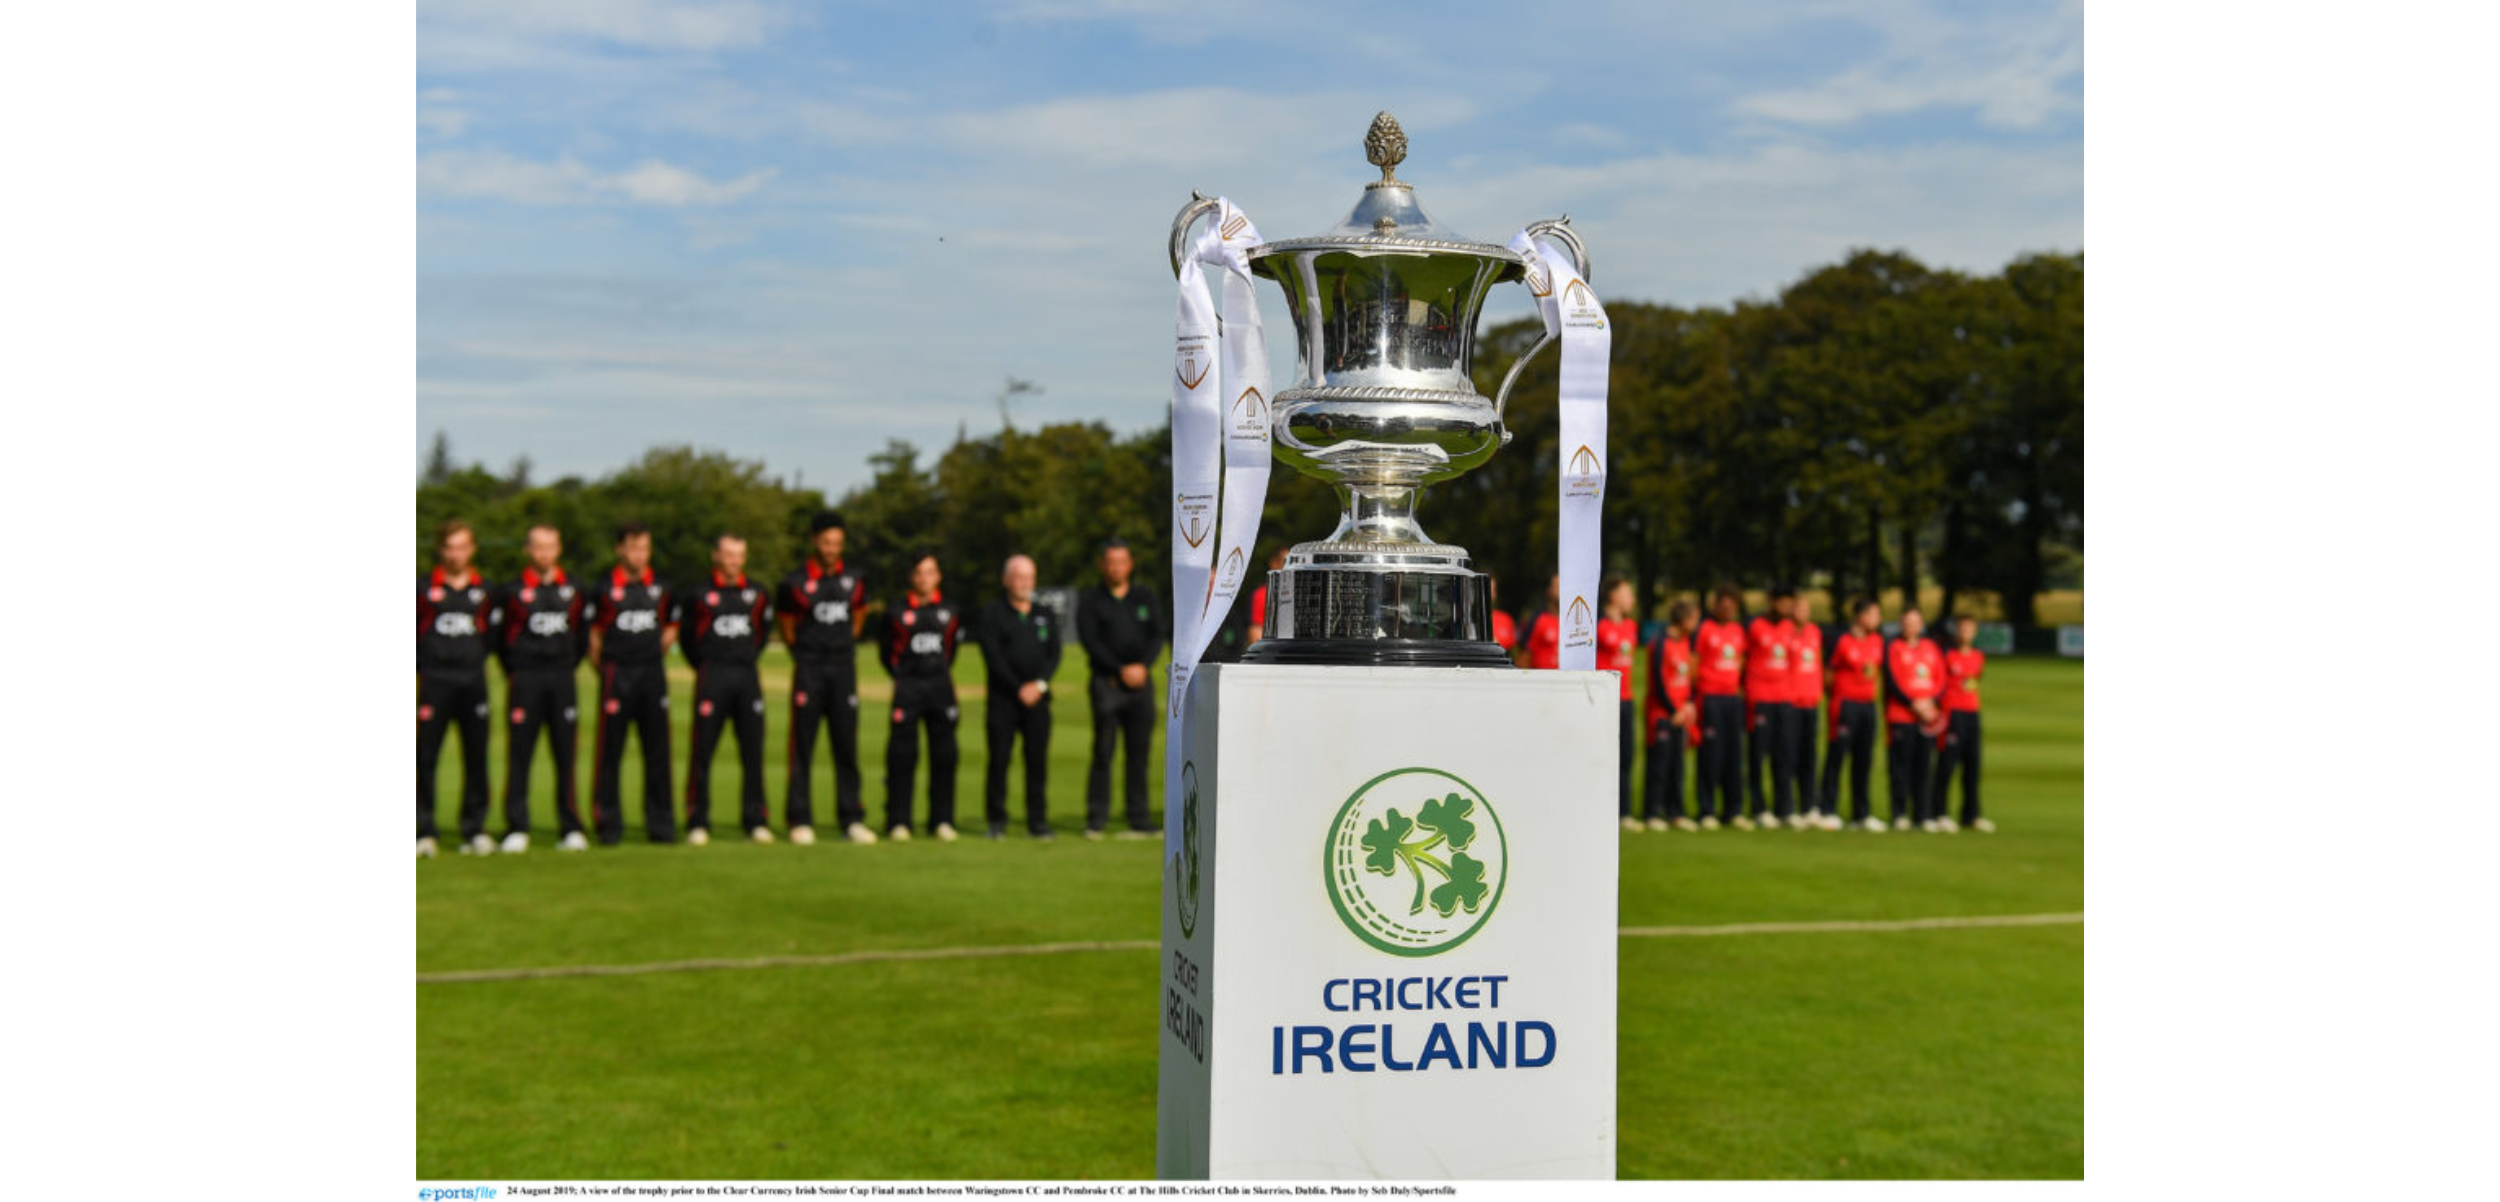 Cricket Ireland announces prize money for allIreland cup finals for